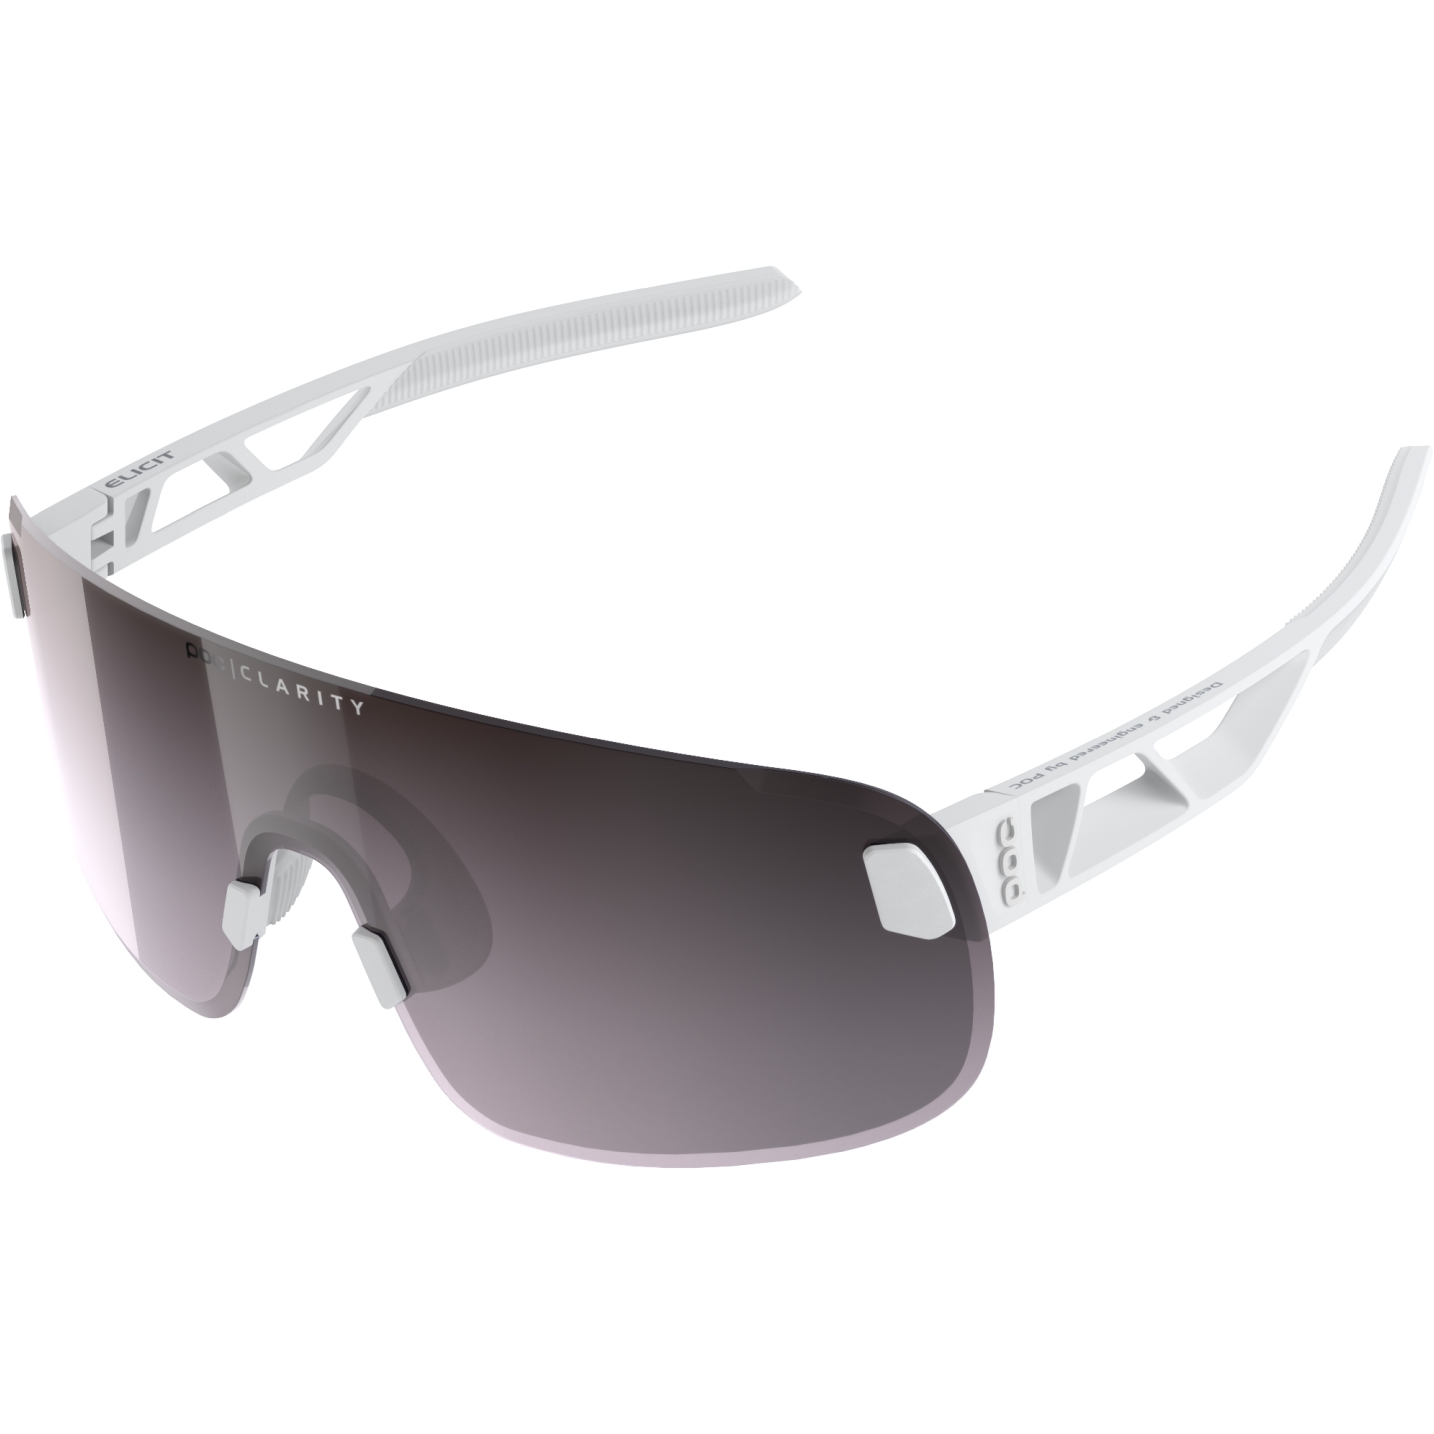 Productfoto van POC Elicit Glasses - Mirror Lens - Hydrogen White / Violet Silver